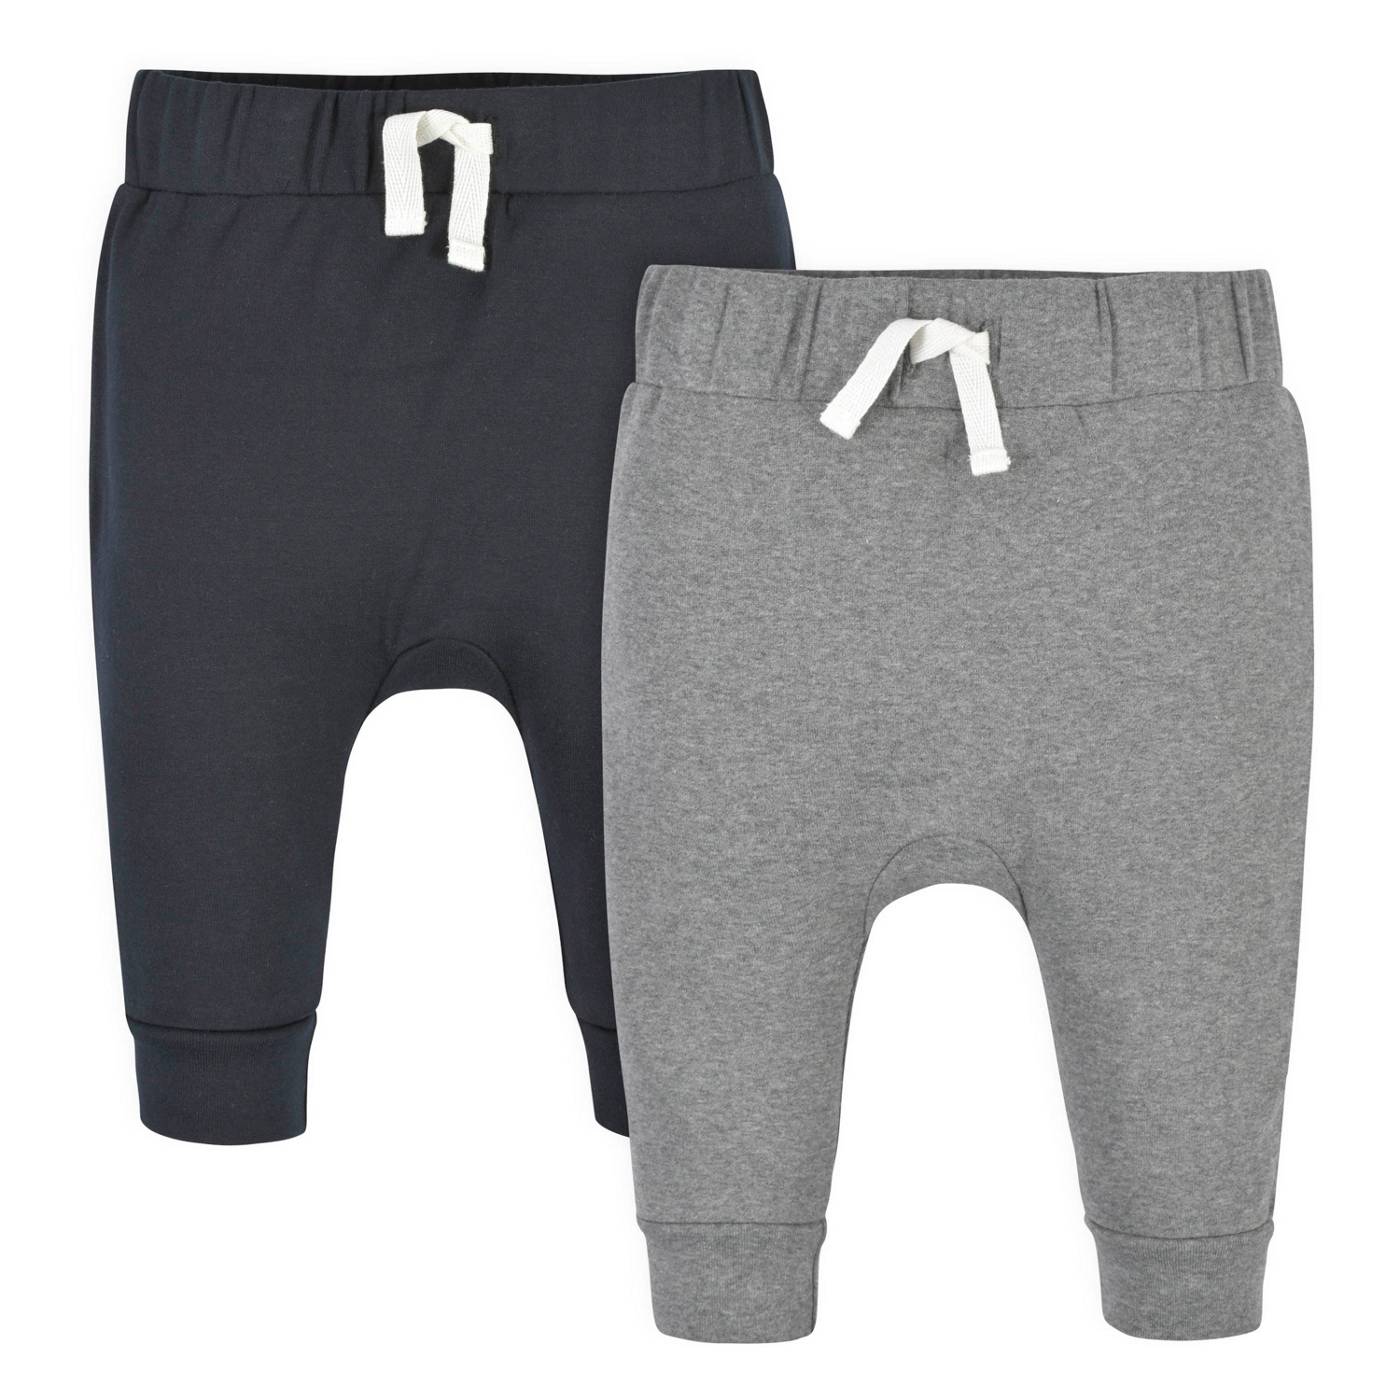 Gerber Baby Neutral Black & Gray Pants, 2 pk - Shop Outfits at H-E-B